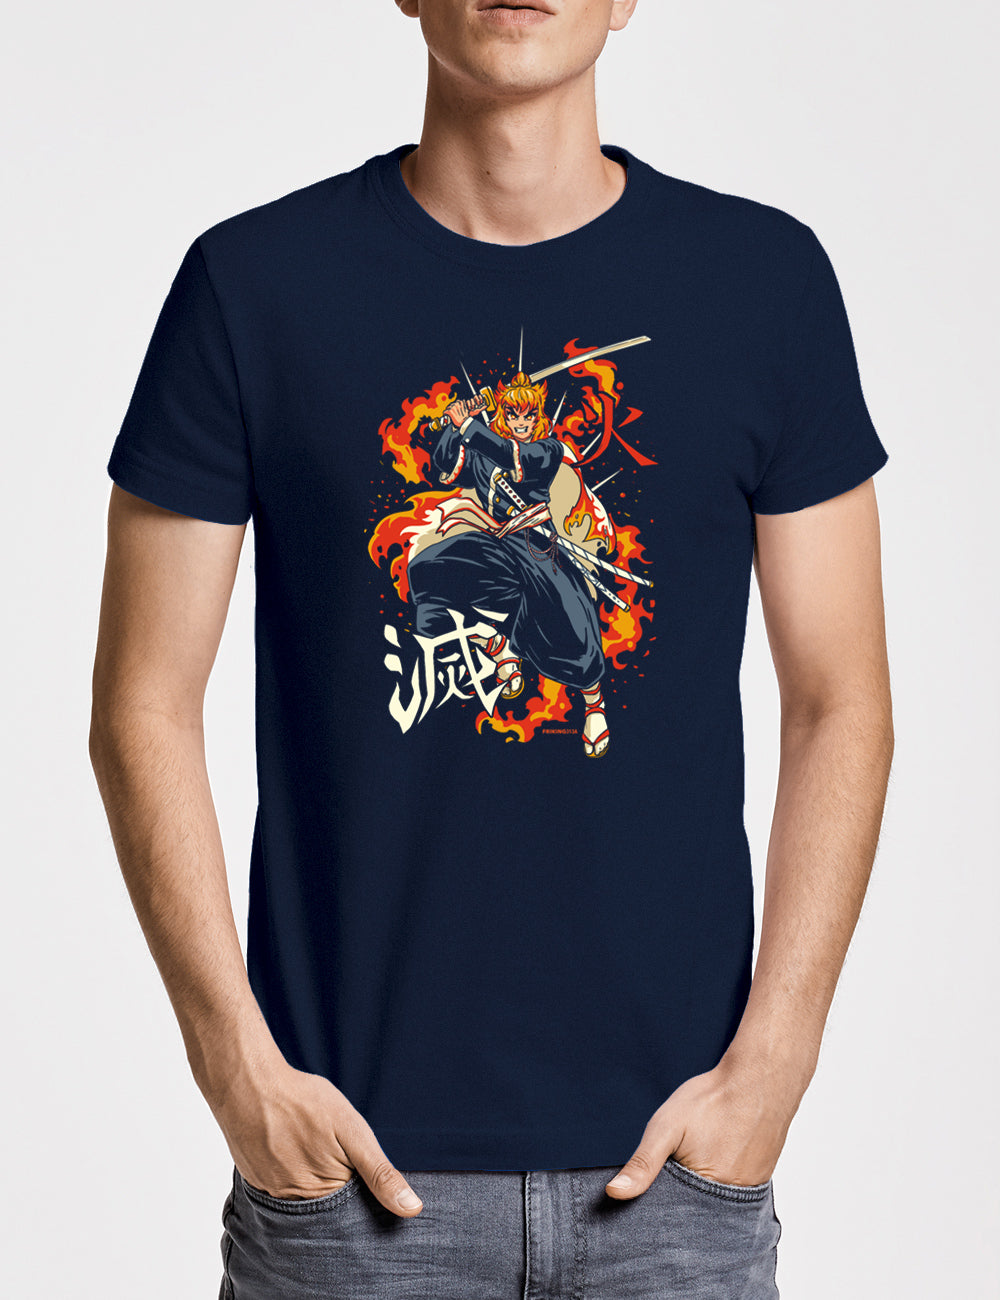 Flames samurai